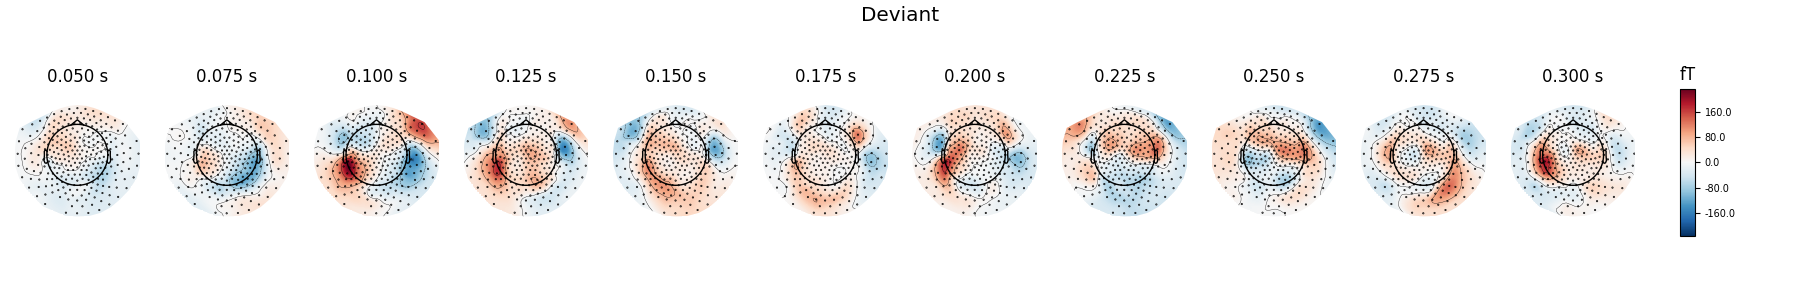 Deviant, 0.050 s, 0.075 s, 0.100 s, 0.125 s, 0.150 s, 0.175 s, 0.200 s, 0.225 s, 0.250 s, 0.275 s, 0.300 s, fT